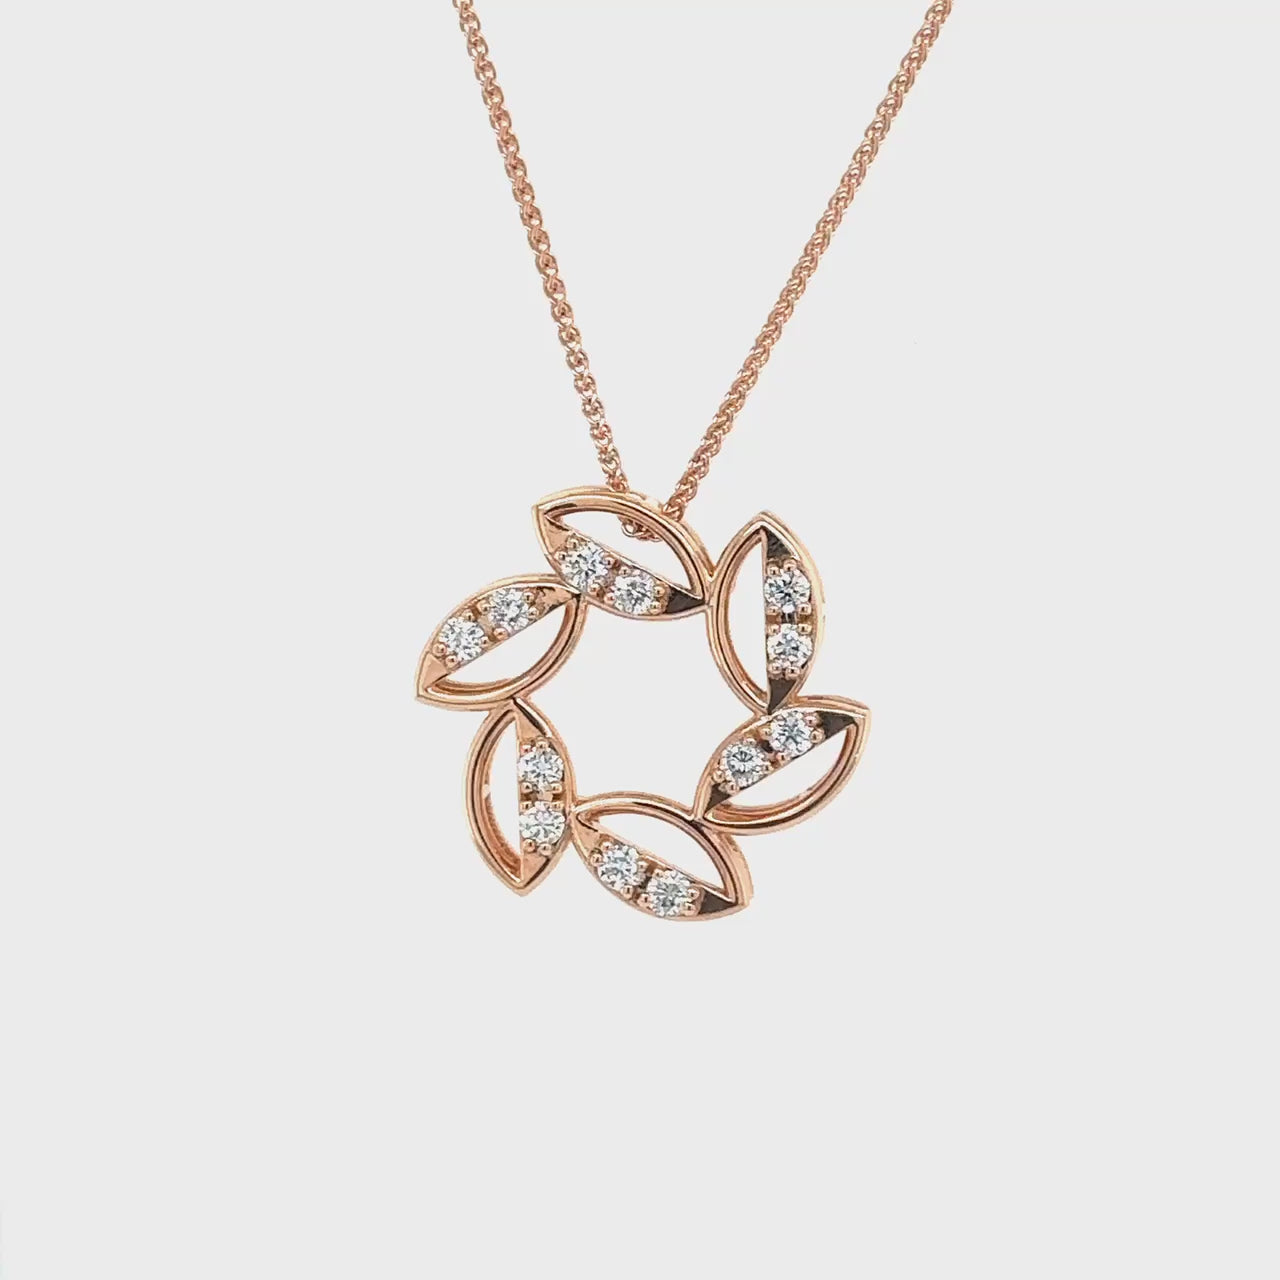  Round Brilliant Diamond Pendant, elegant jewelry, white gold necklace, luxury accessory, sparkling pendant, exquisite craftsmanship, fine jewelry piece, dazzling centerpiece, statement necklace.